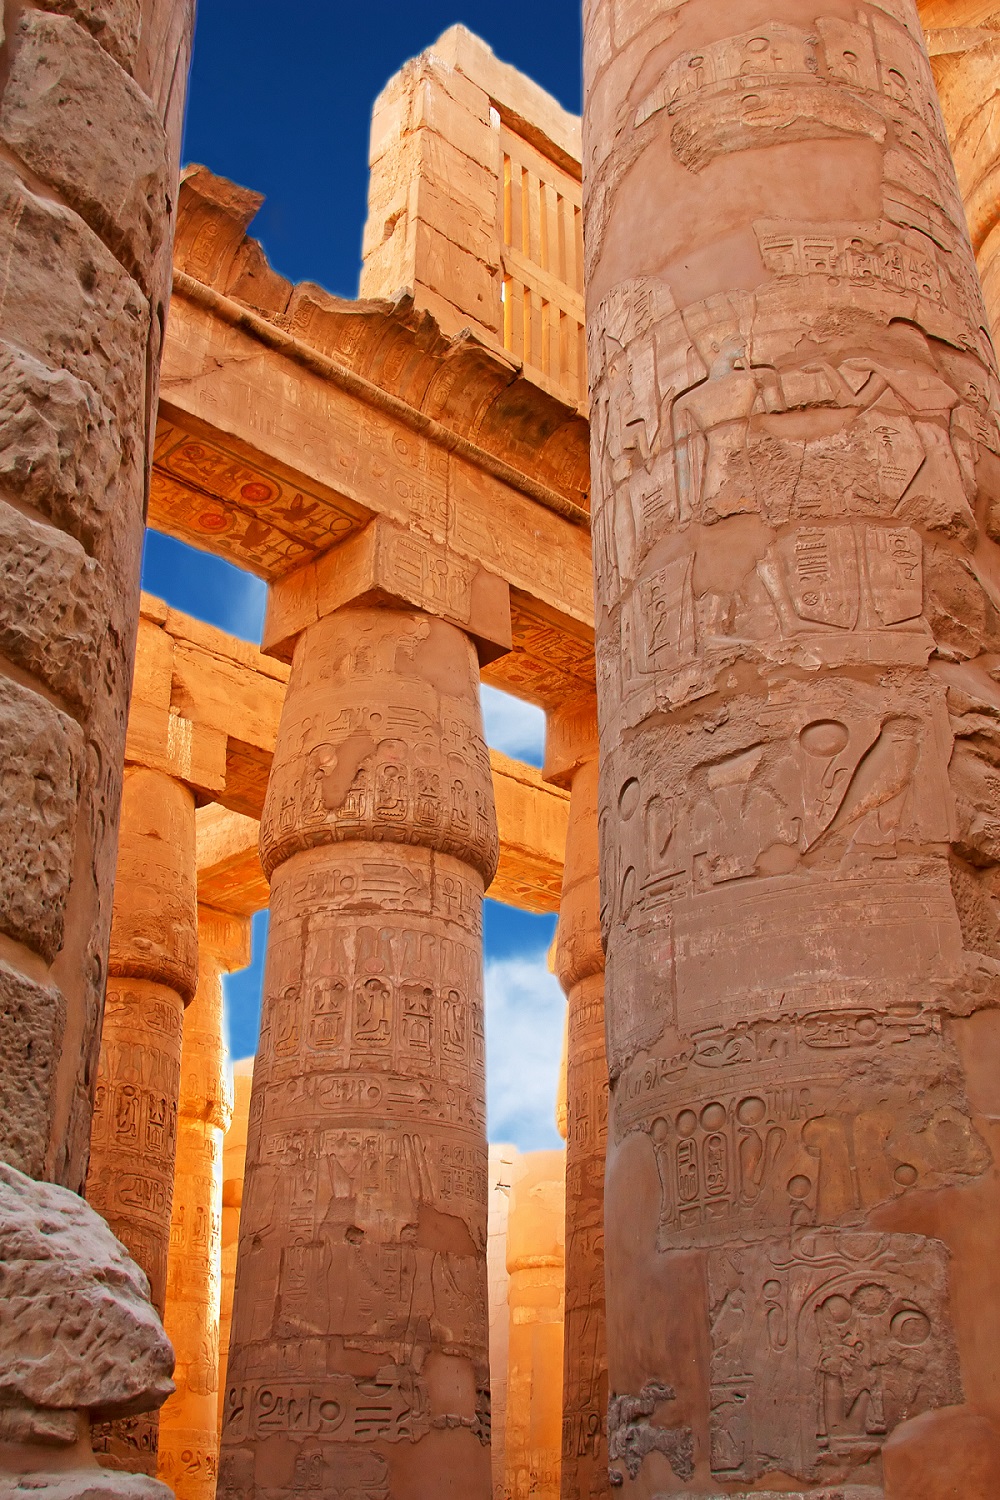 old-egypt-hieroglyphs-carved-on-the-columns-of-karnak-temple-valley-of-kings-egypt.jpg